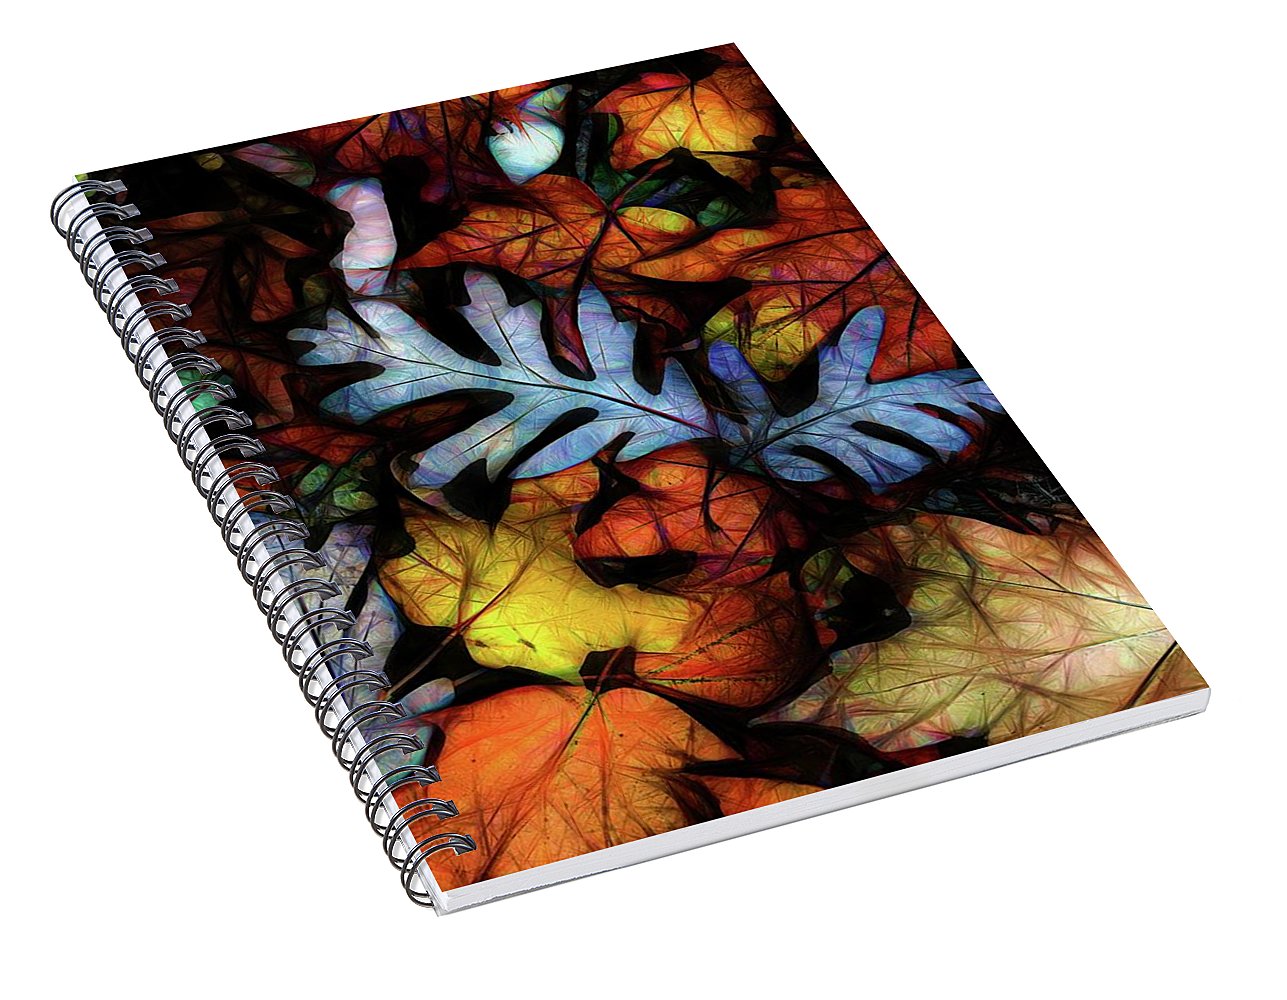 Mid October Leaves 1 - Spiral Notebook